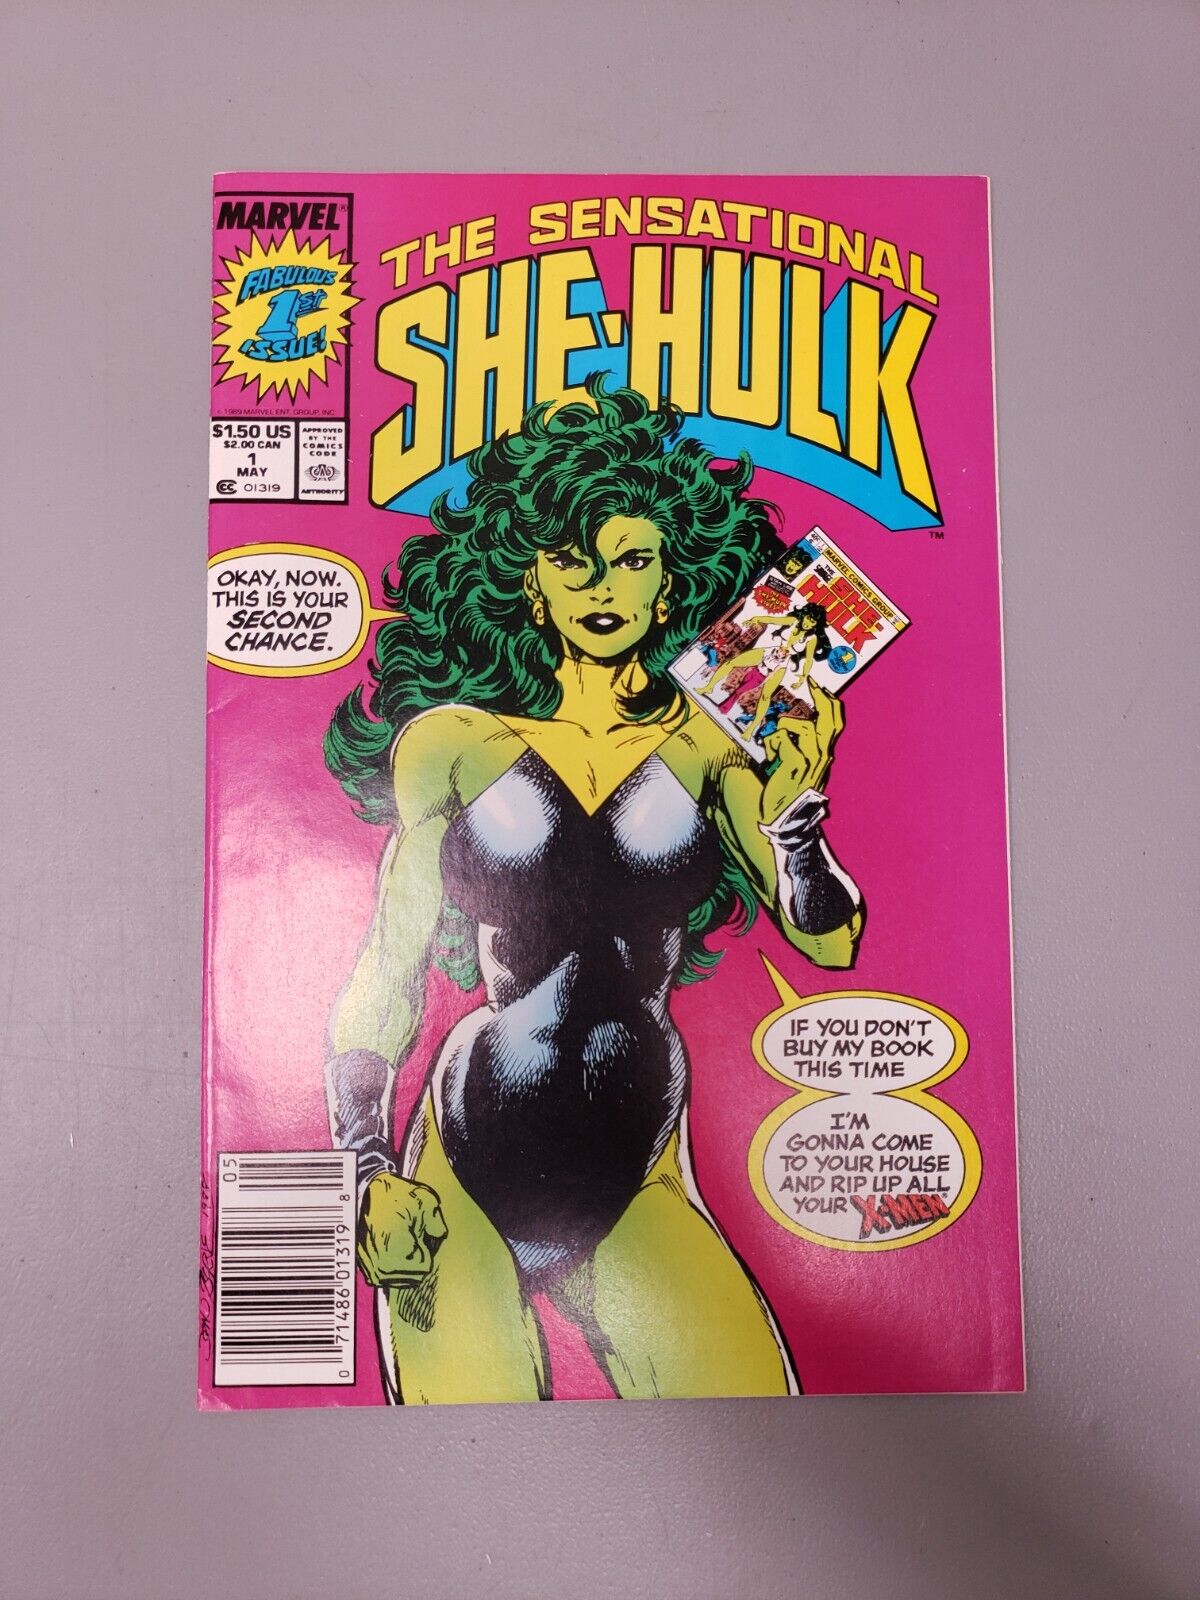 Vintage The Sensational She-Hulk Volume 2 #1 May 1989 Newsstand By Marvel Comics